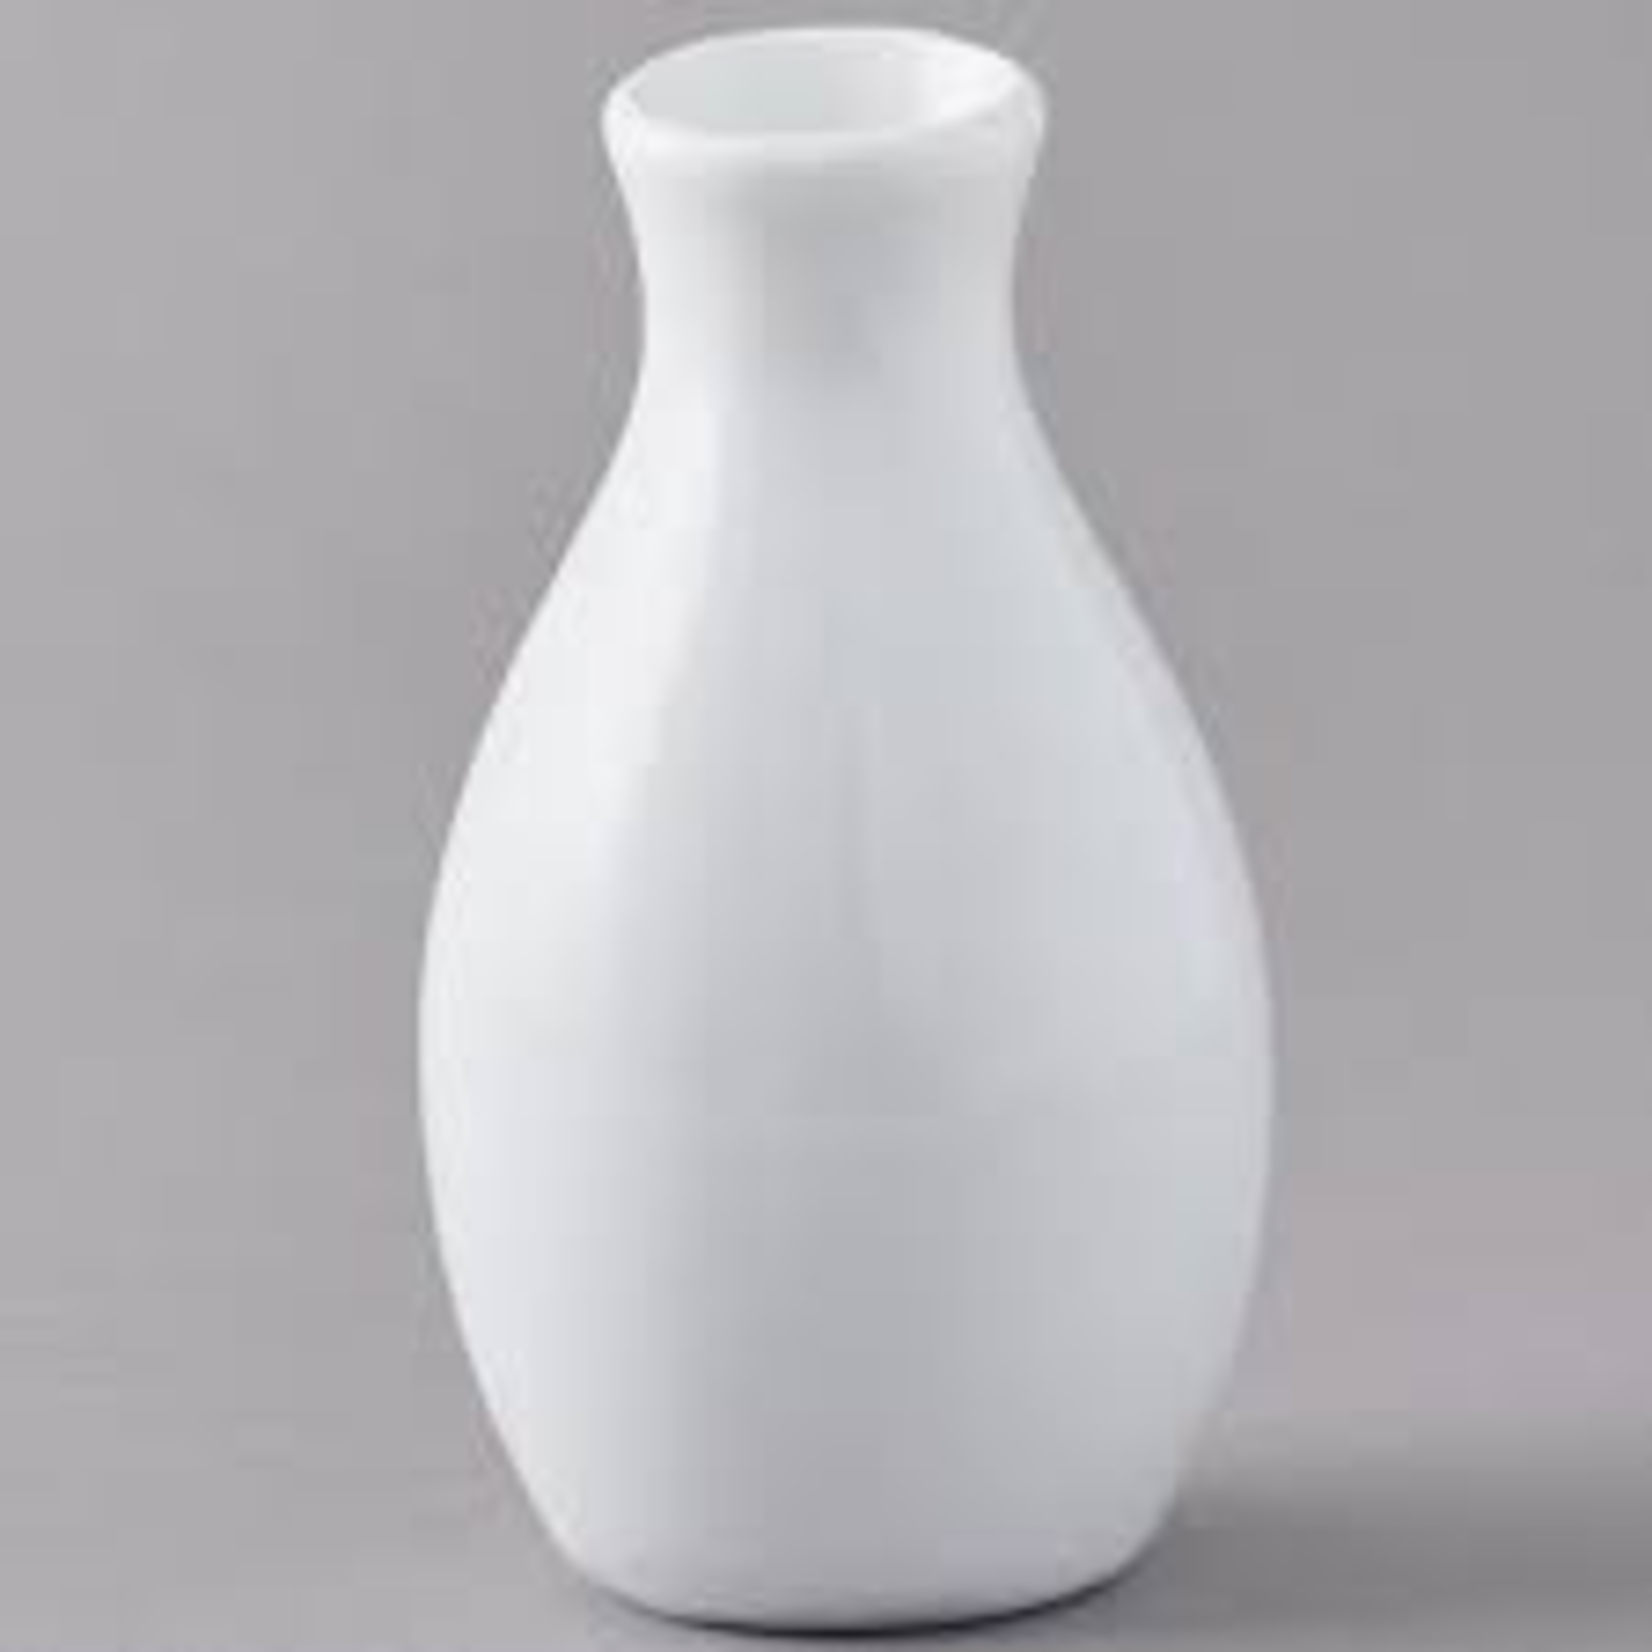 AMERICAN METALCRAFT, INC BVJGG4 AMC White Ceramic Bud Vase Jug 4"